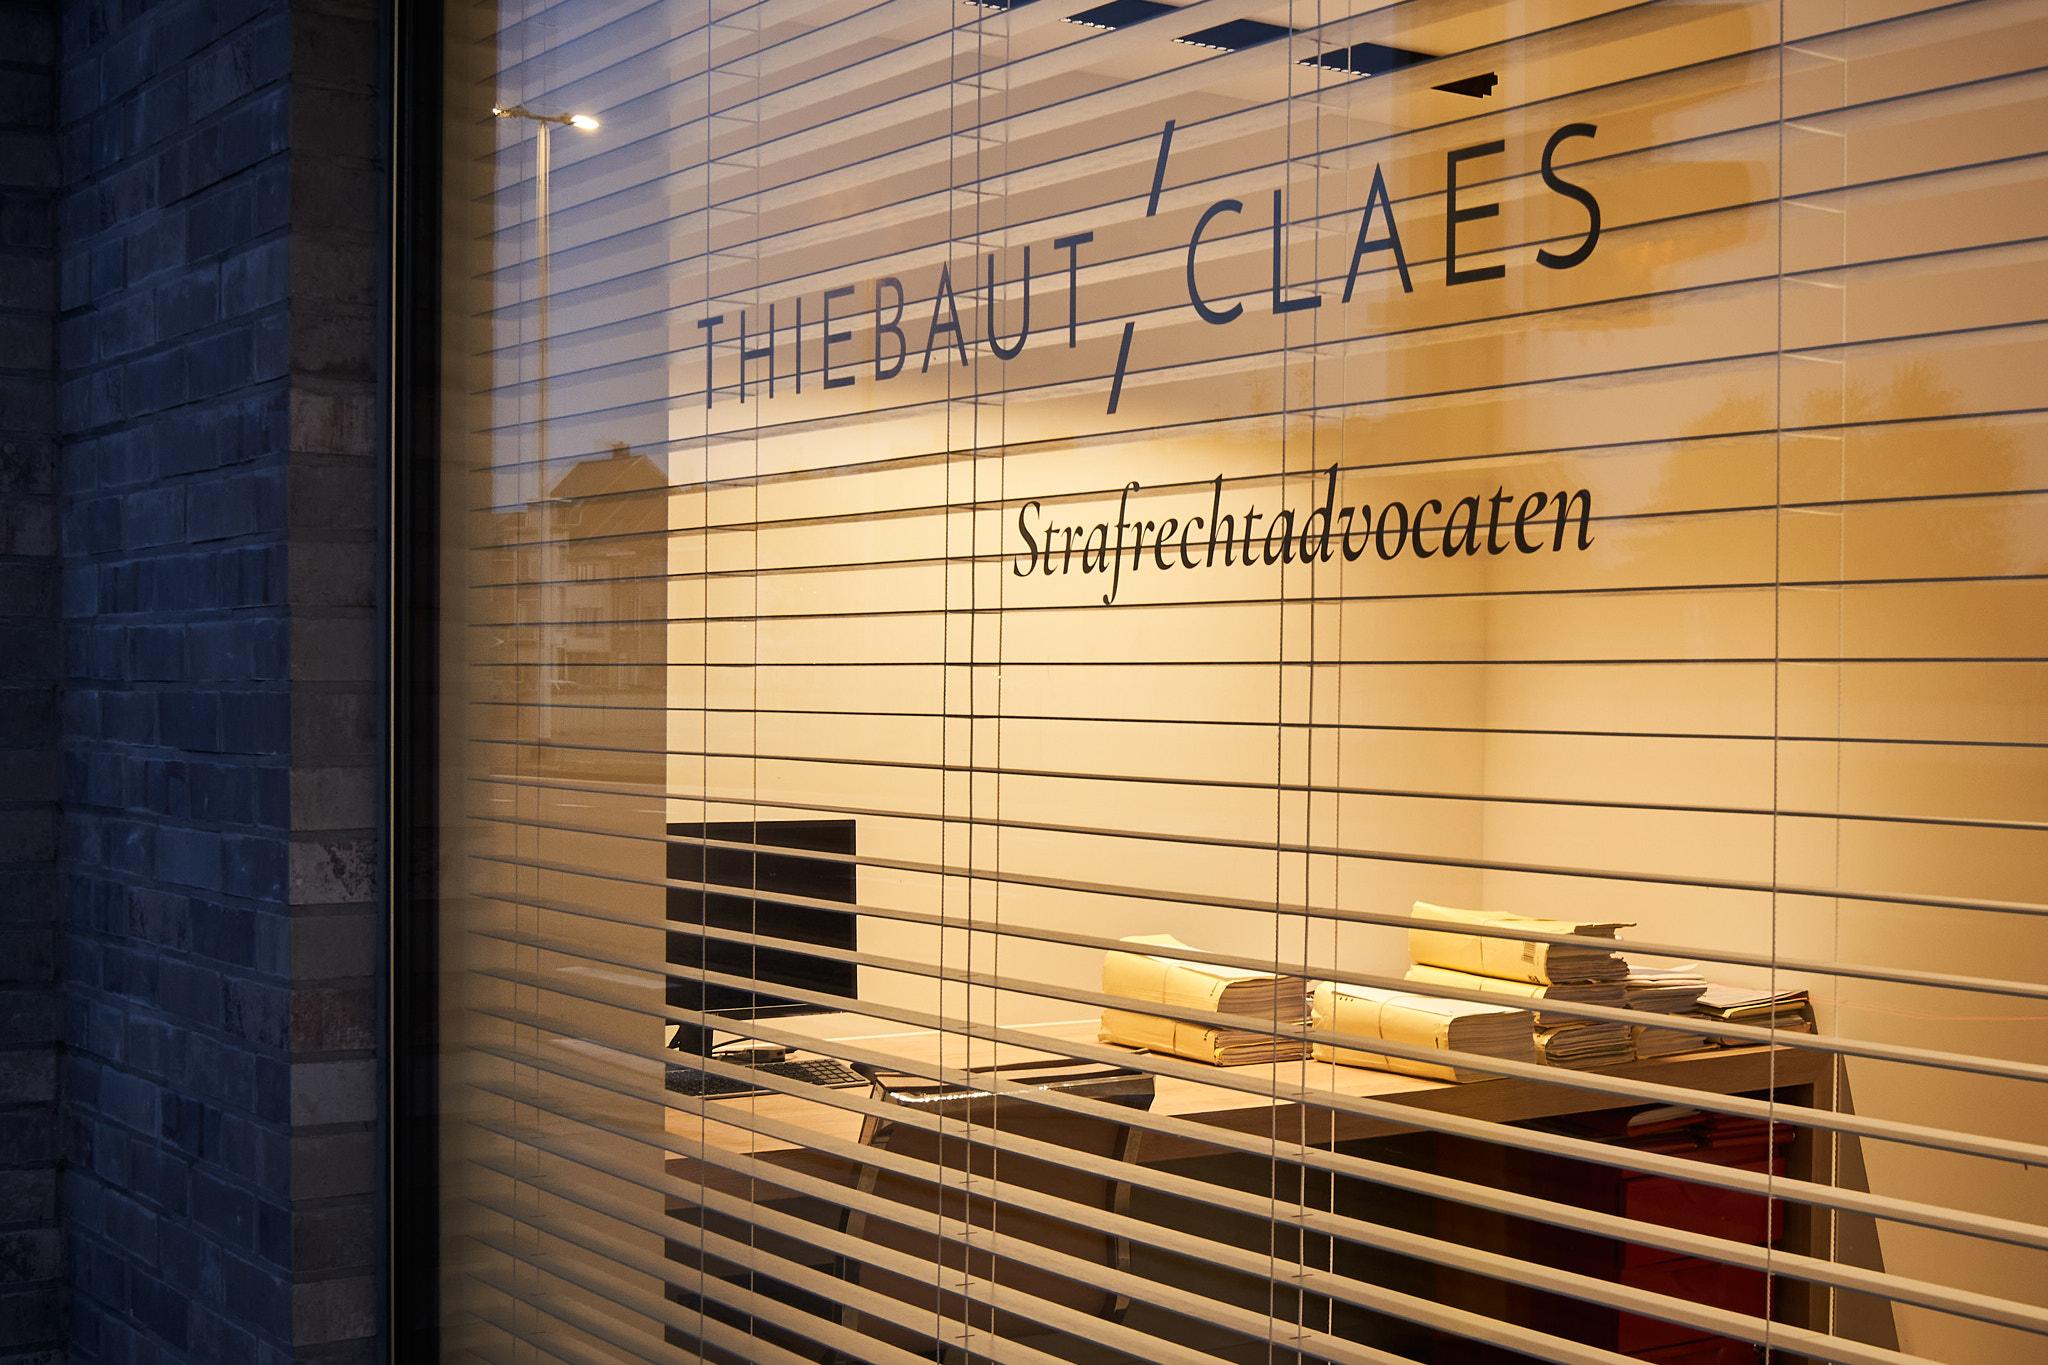 Thiebaut Claes advocaten kantoorraam